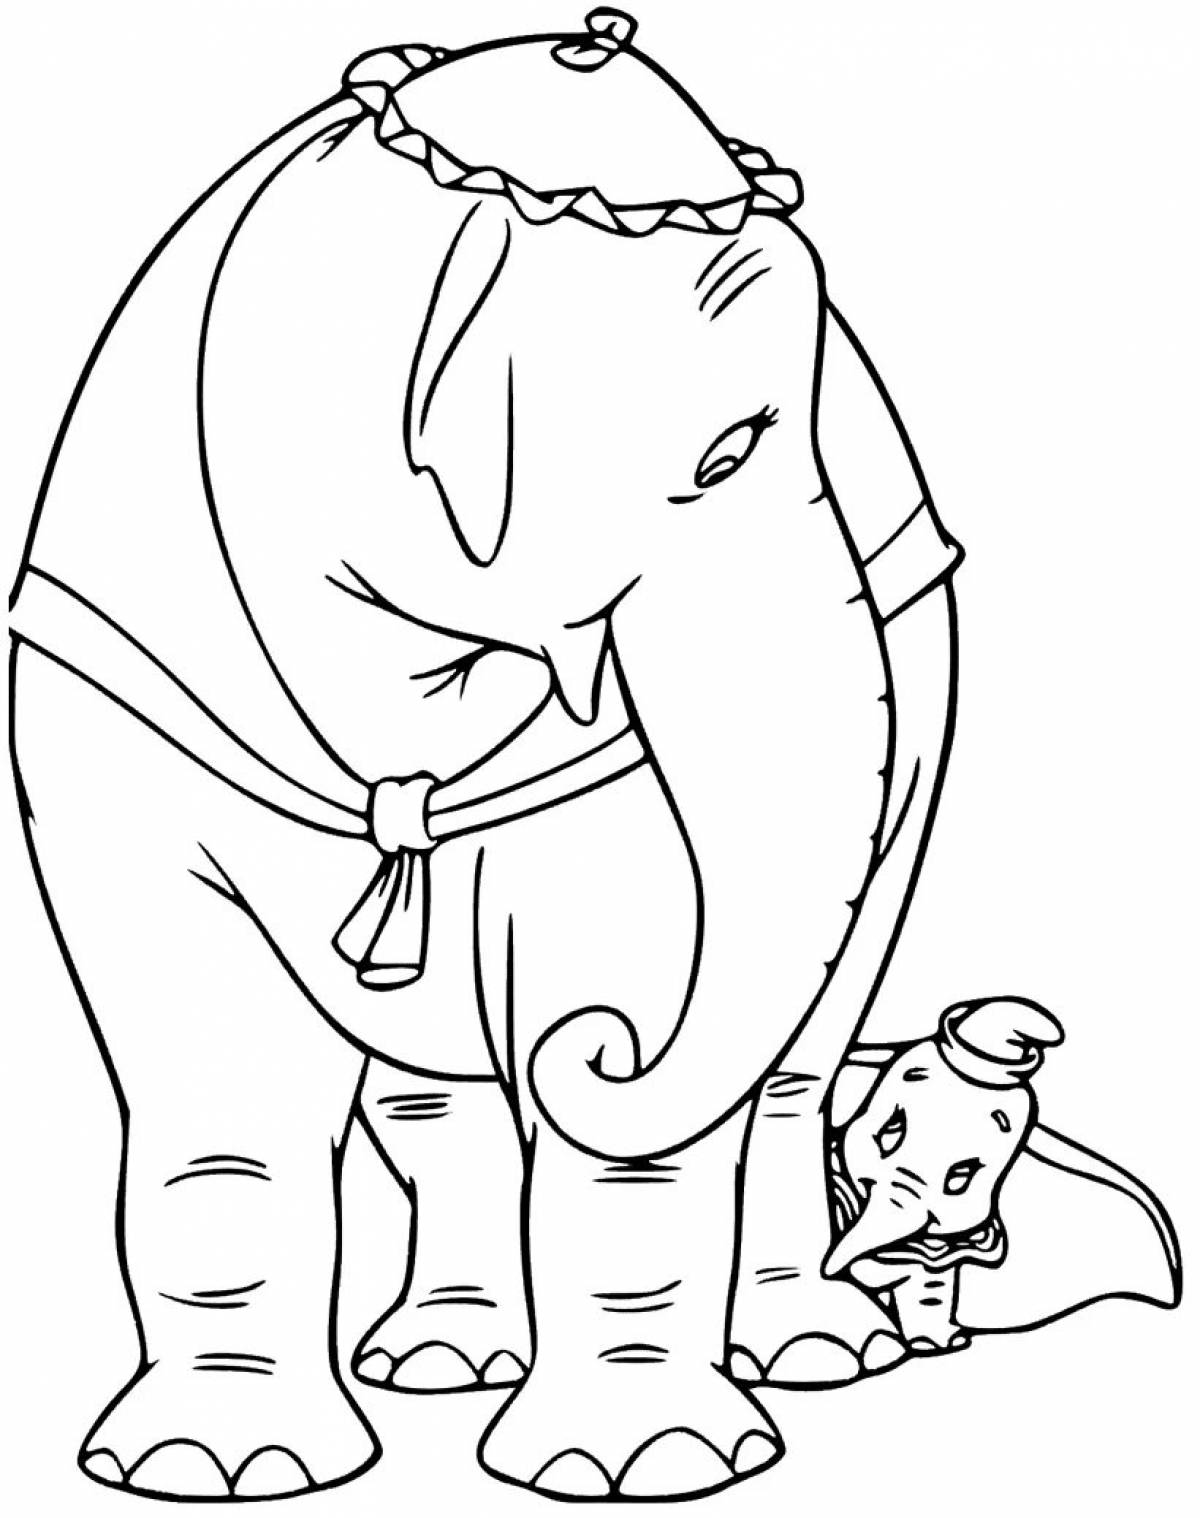 Раскраска мистический слон